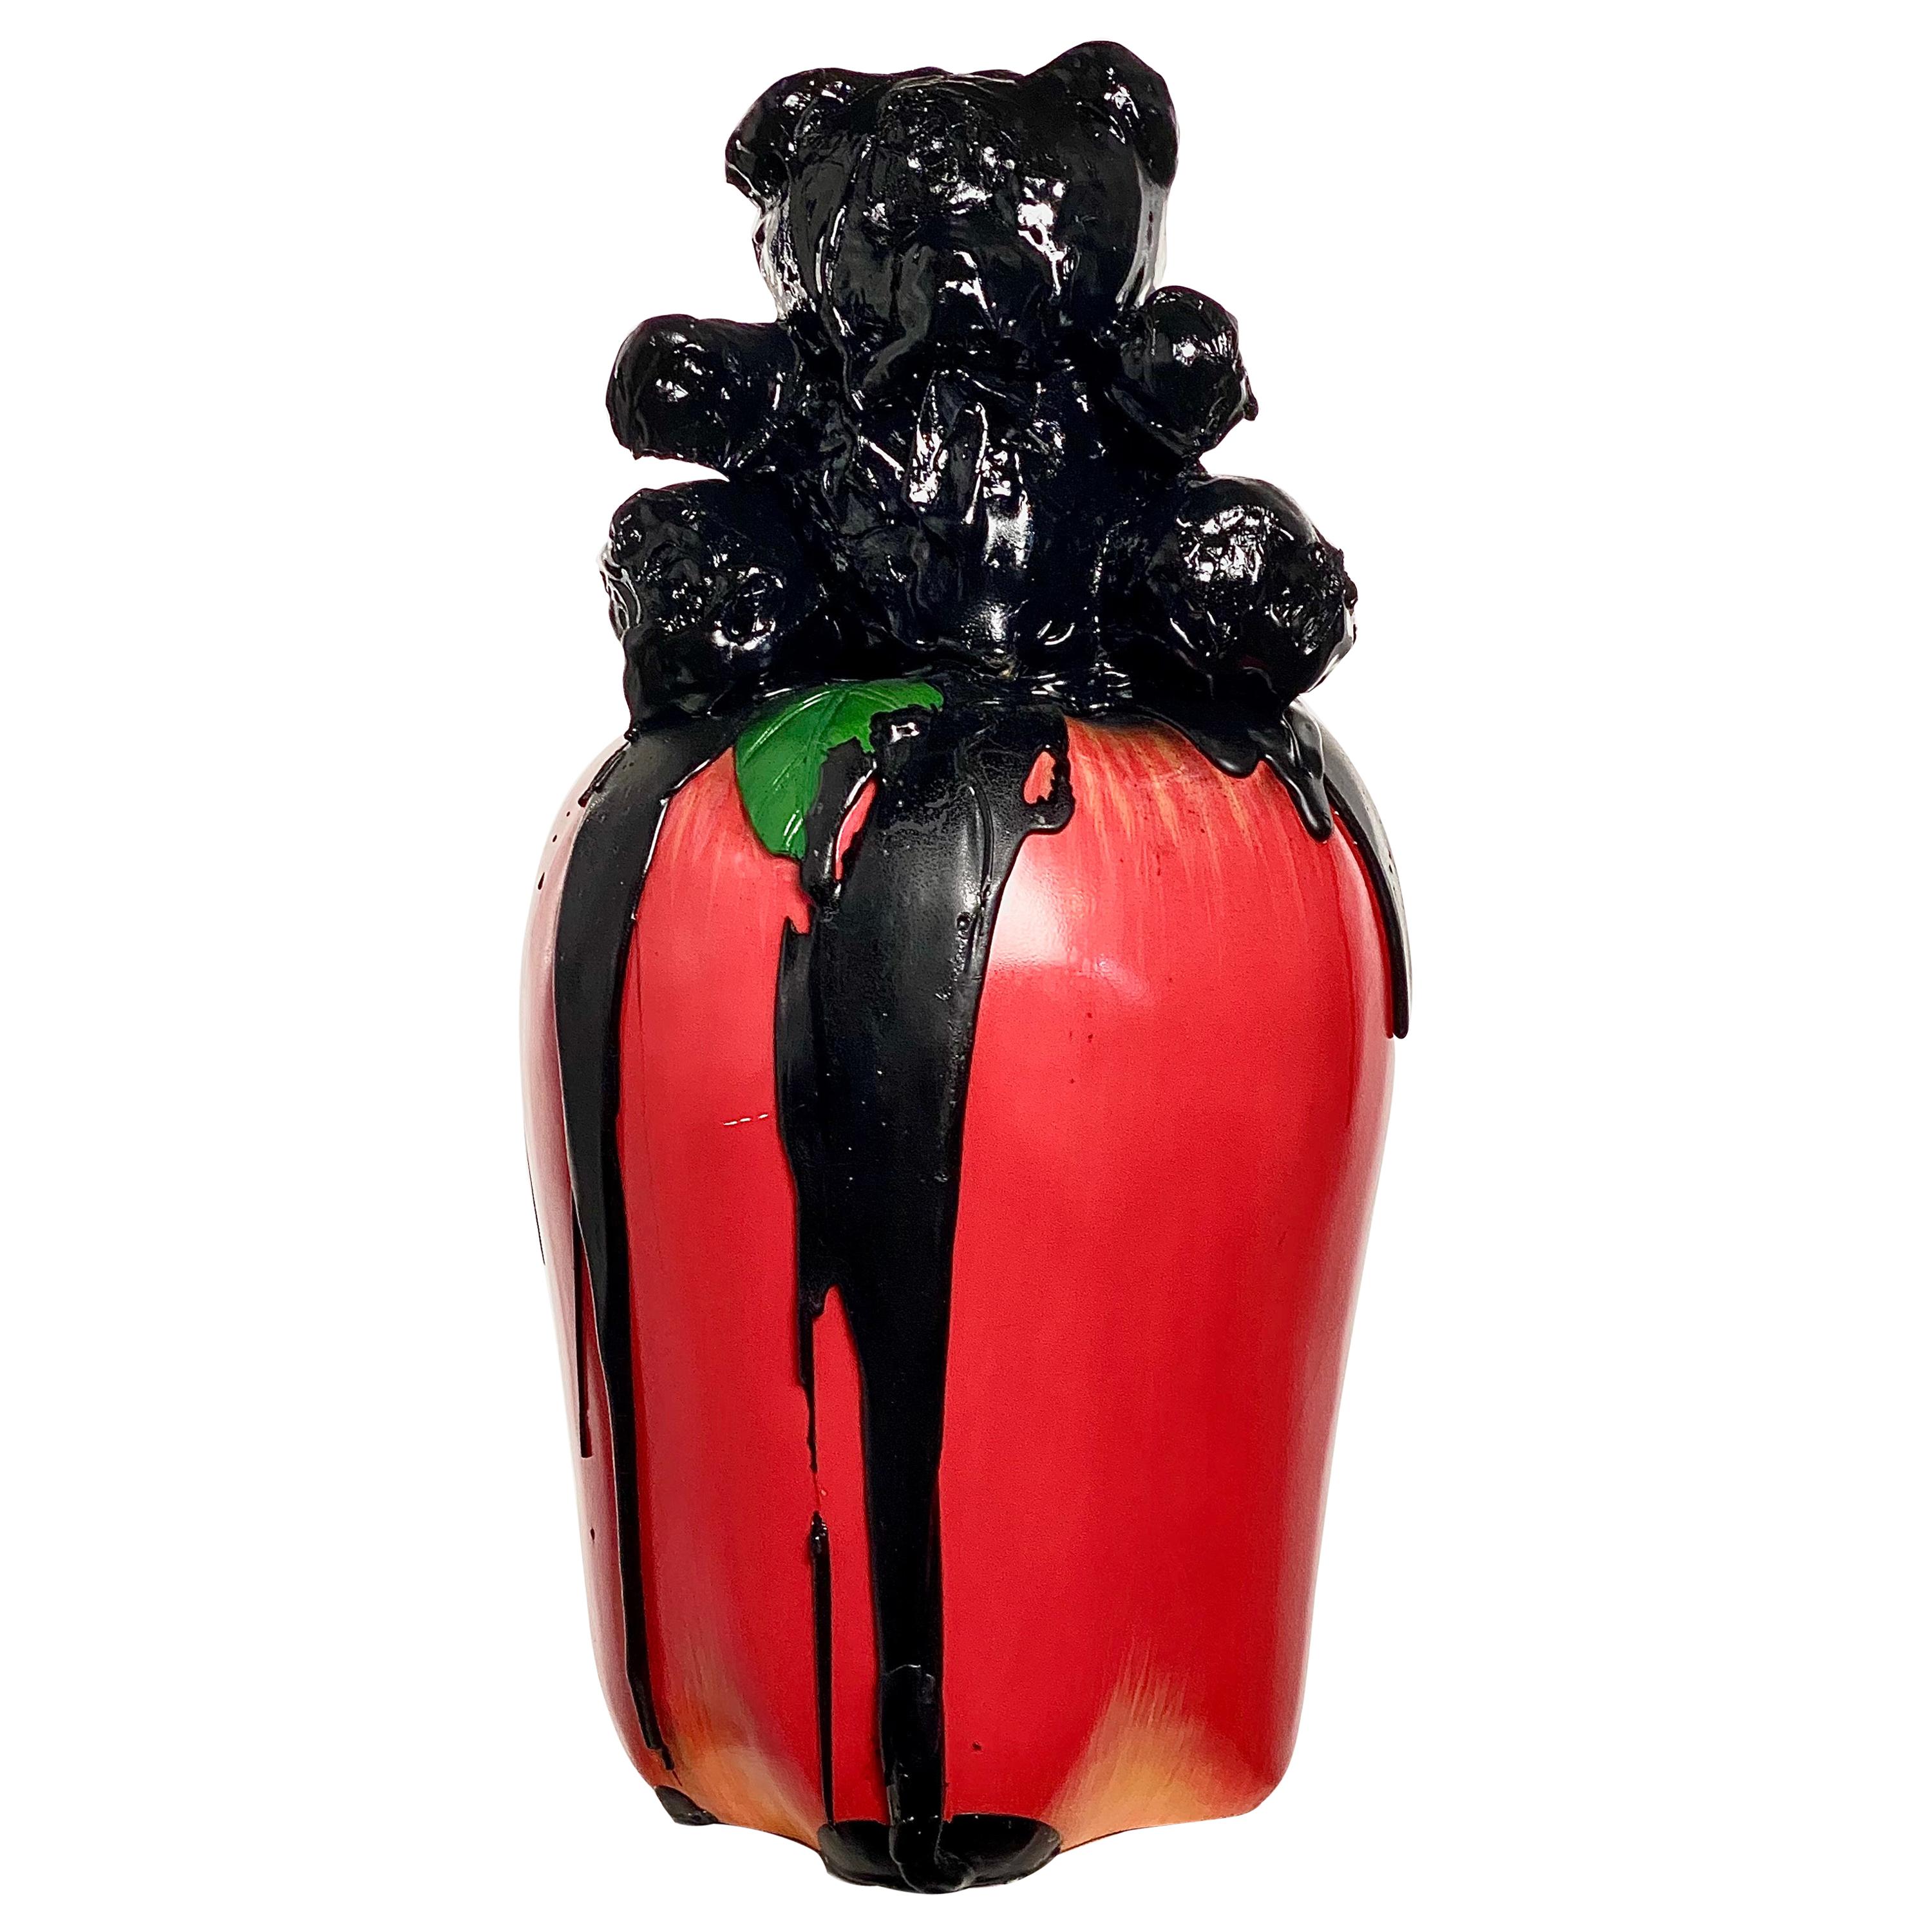 Black TAR Teddy and Red Apple Sculpture, 21st Century by Mattia Biagi